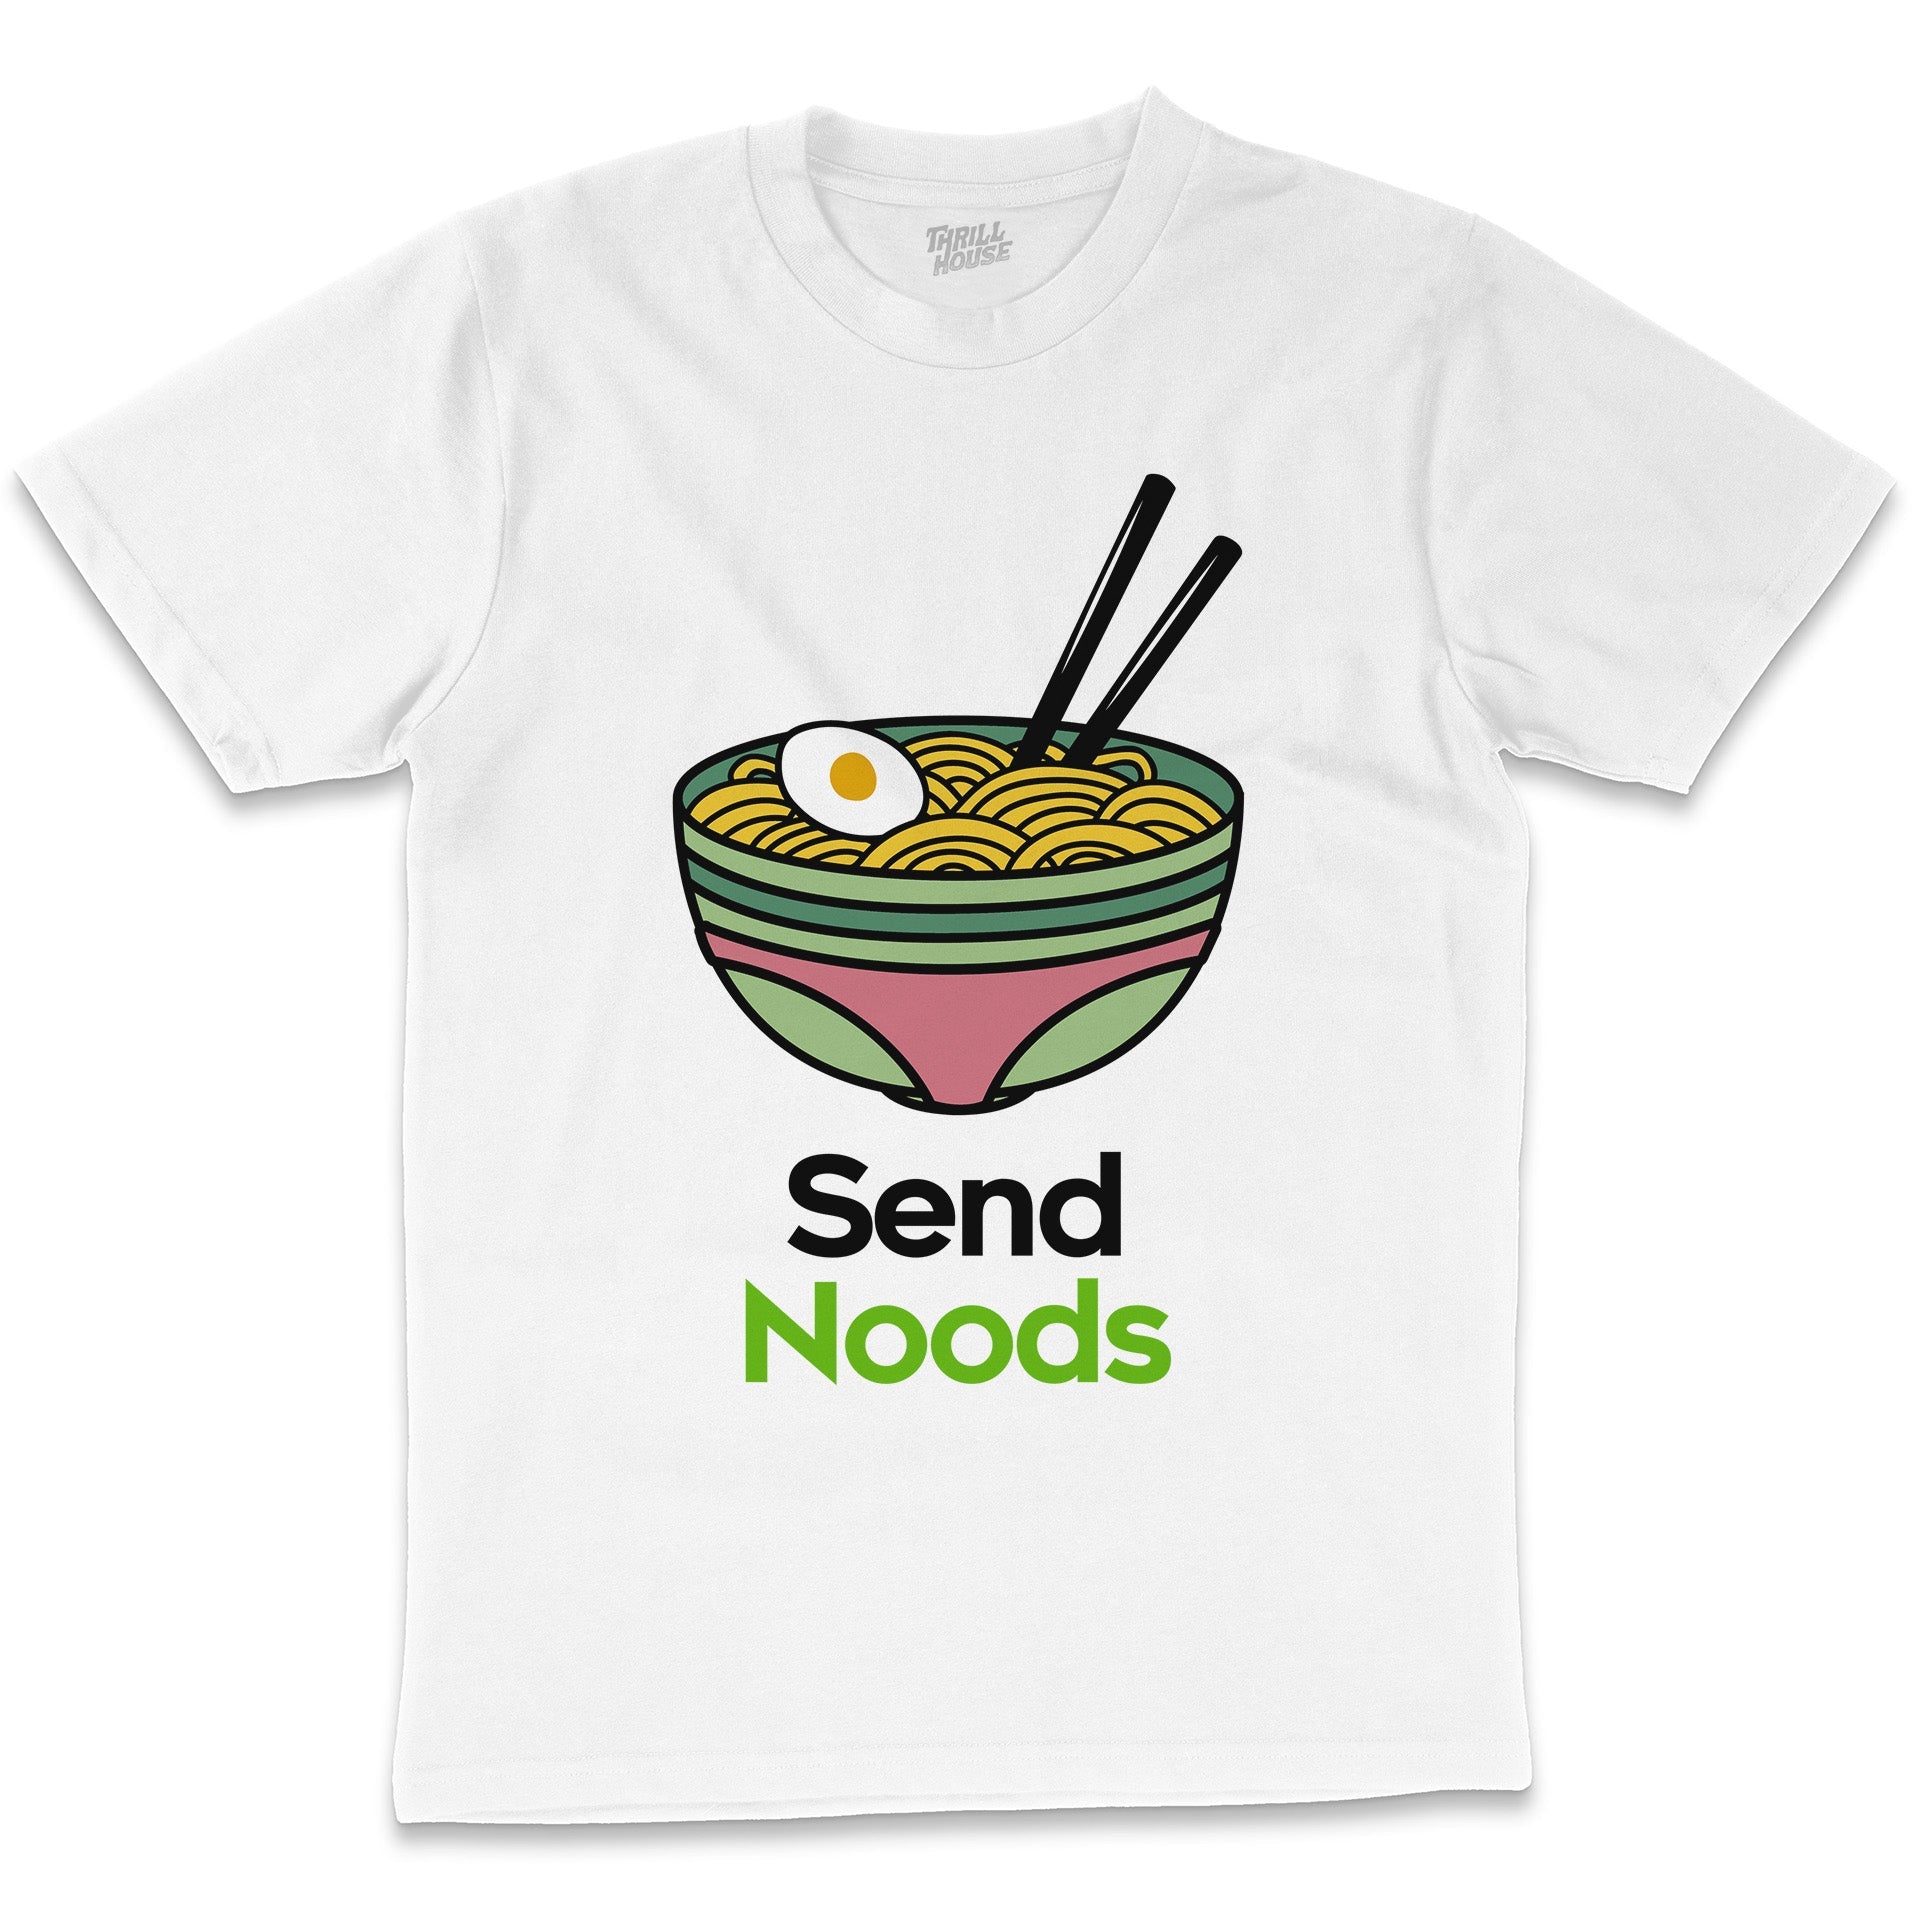 Send Noods Funny Ramen Noodles Pun Japanese Japan Influenced Cotton T-Shirt